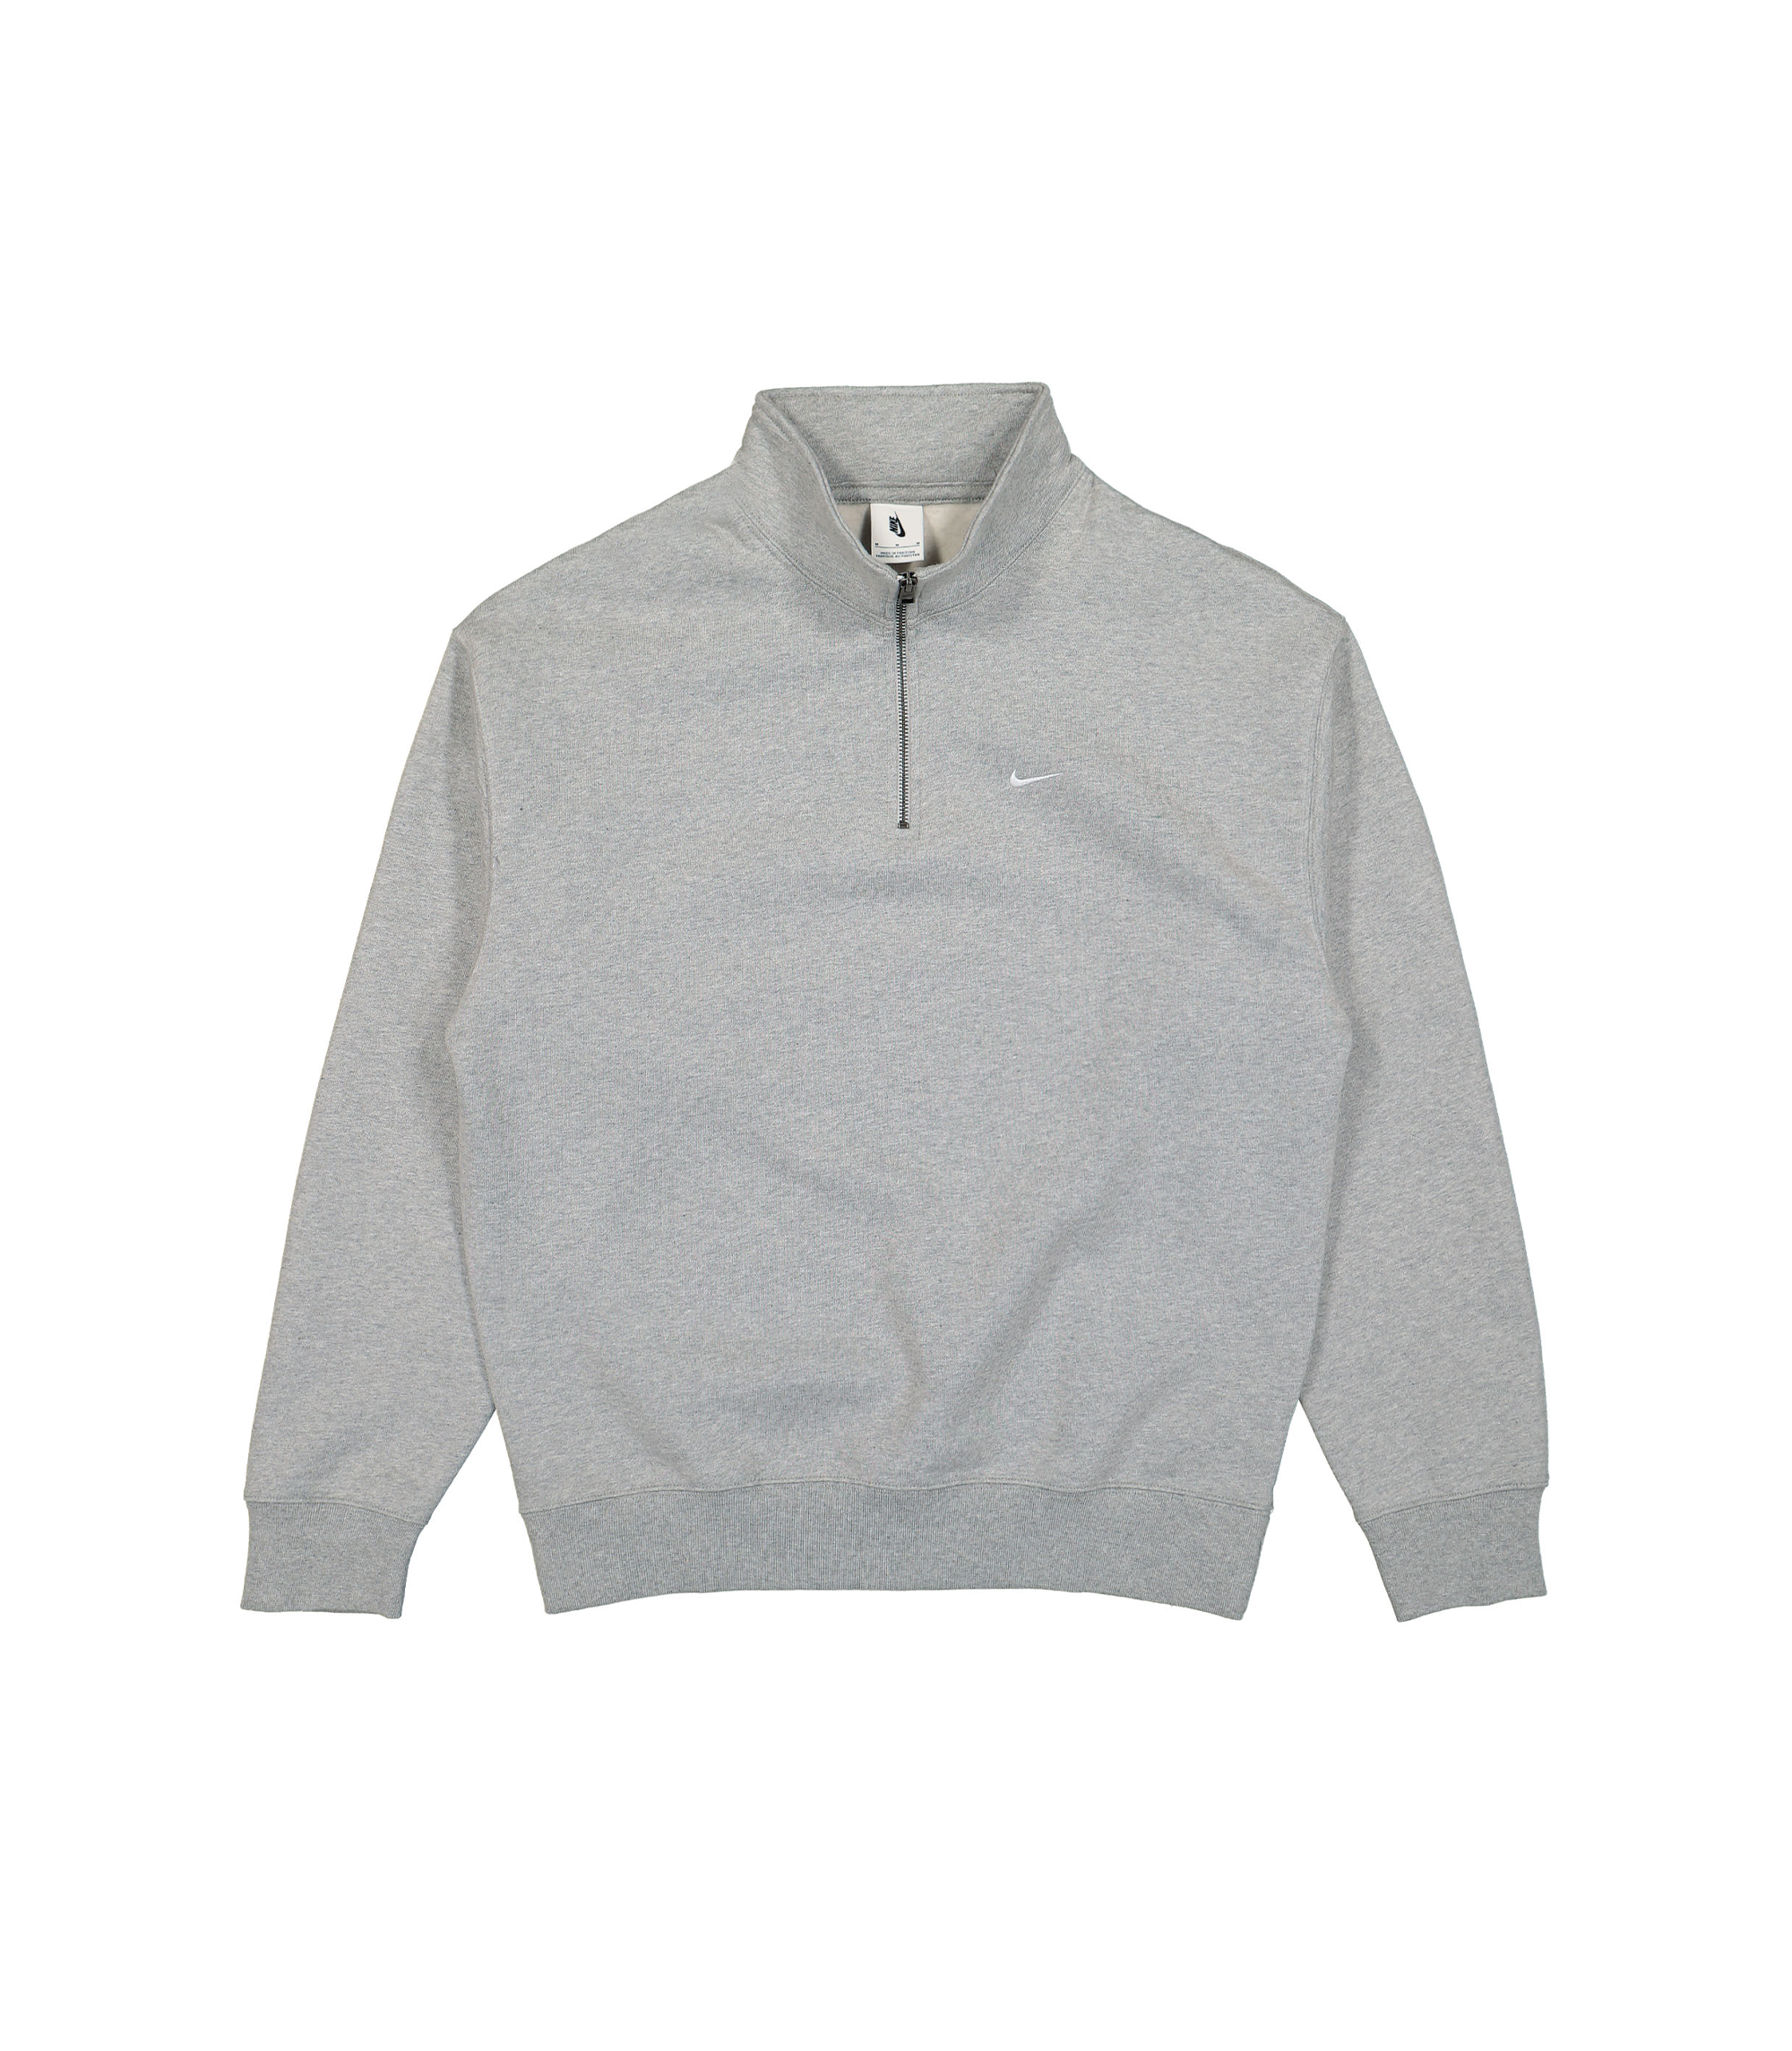 Solo Swoosh Quarter Zip Sweatshirt - Dark Gray Heather / White